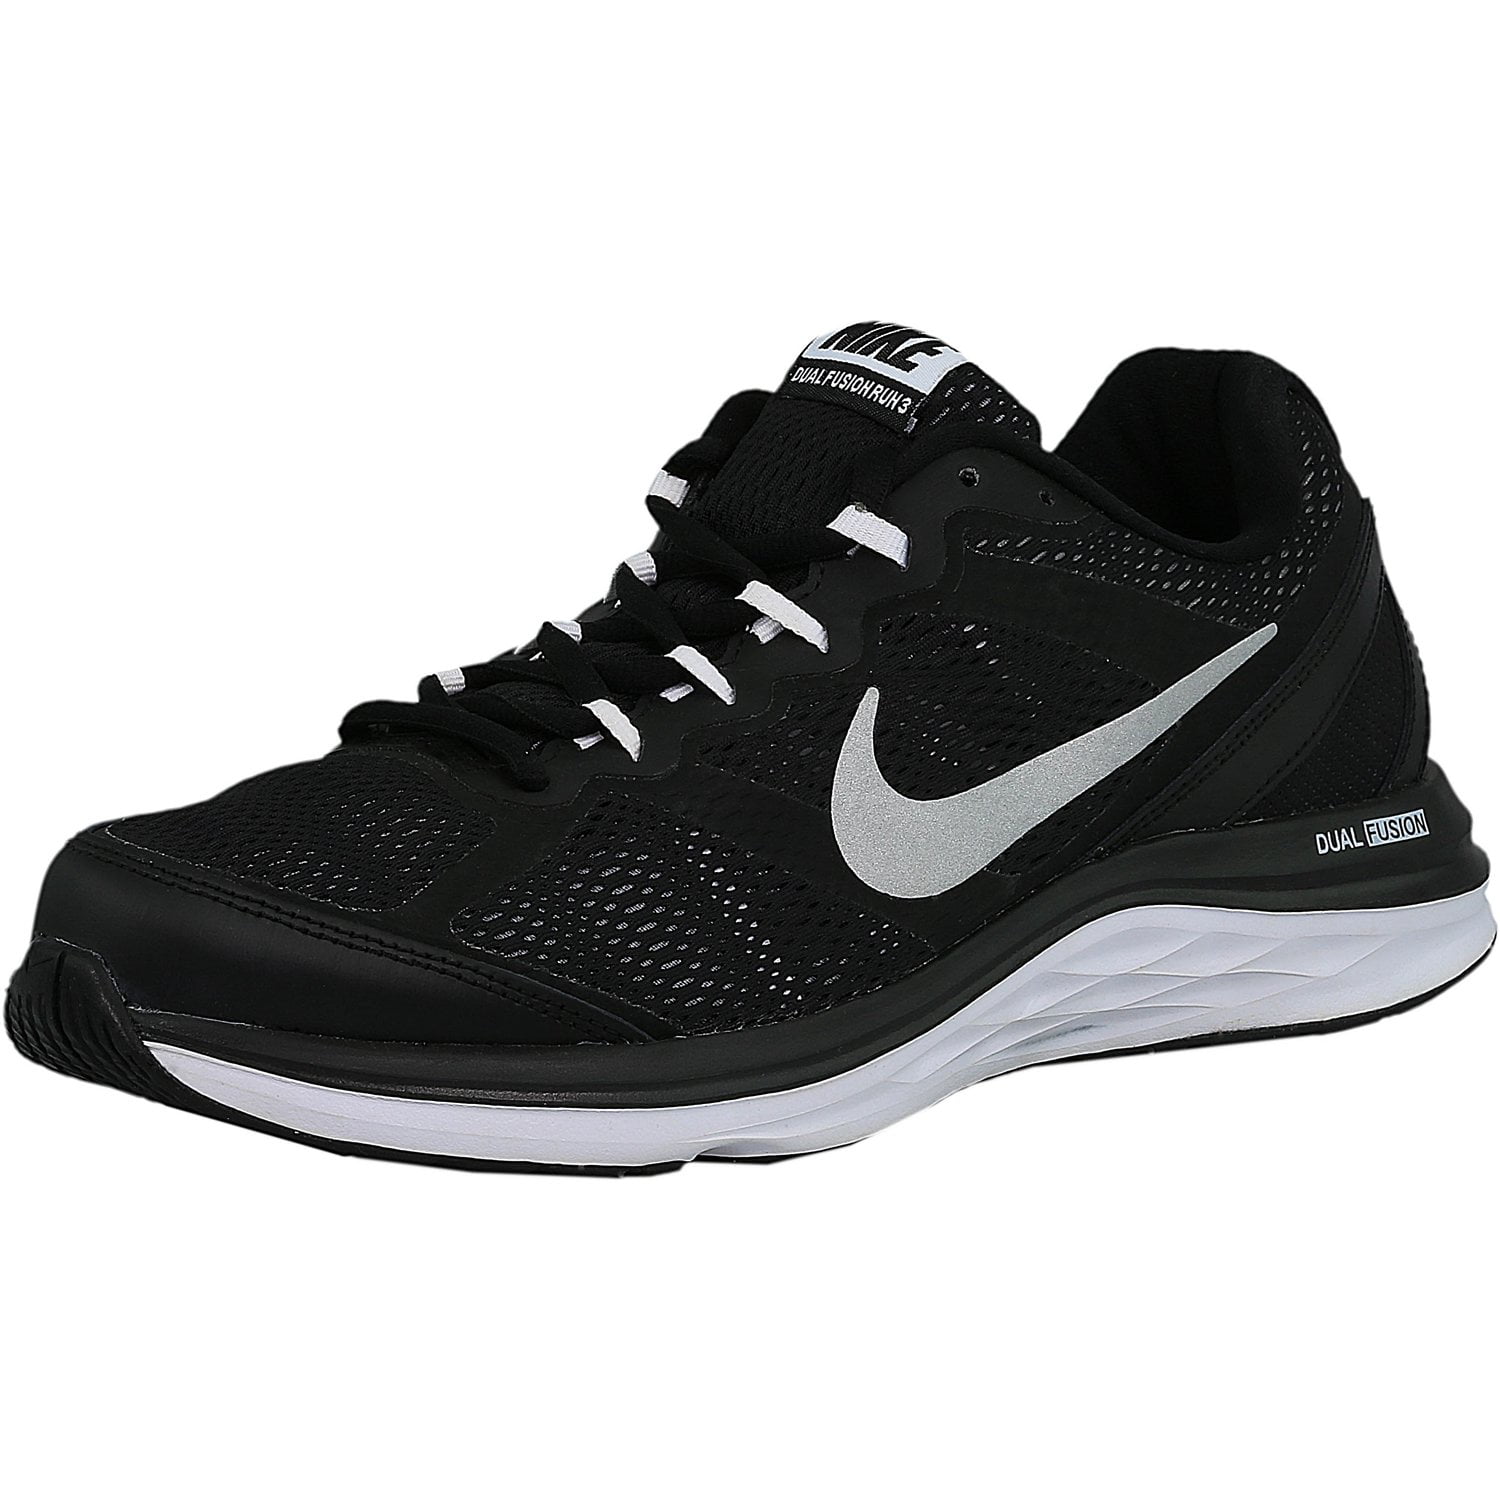 Nike - Nike Men's 653596 004 Ankle-High Cross Trainer Shoe - 10M ...